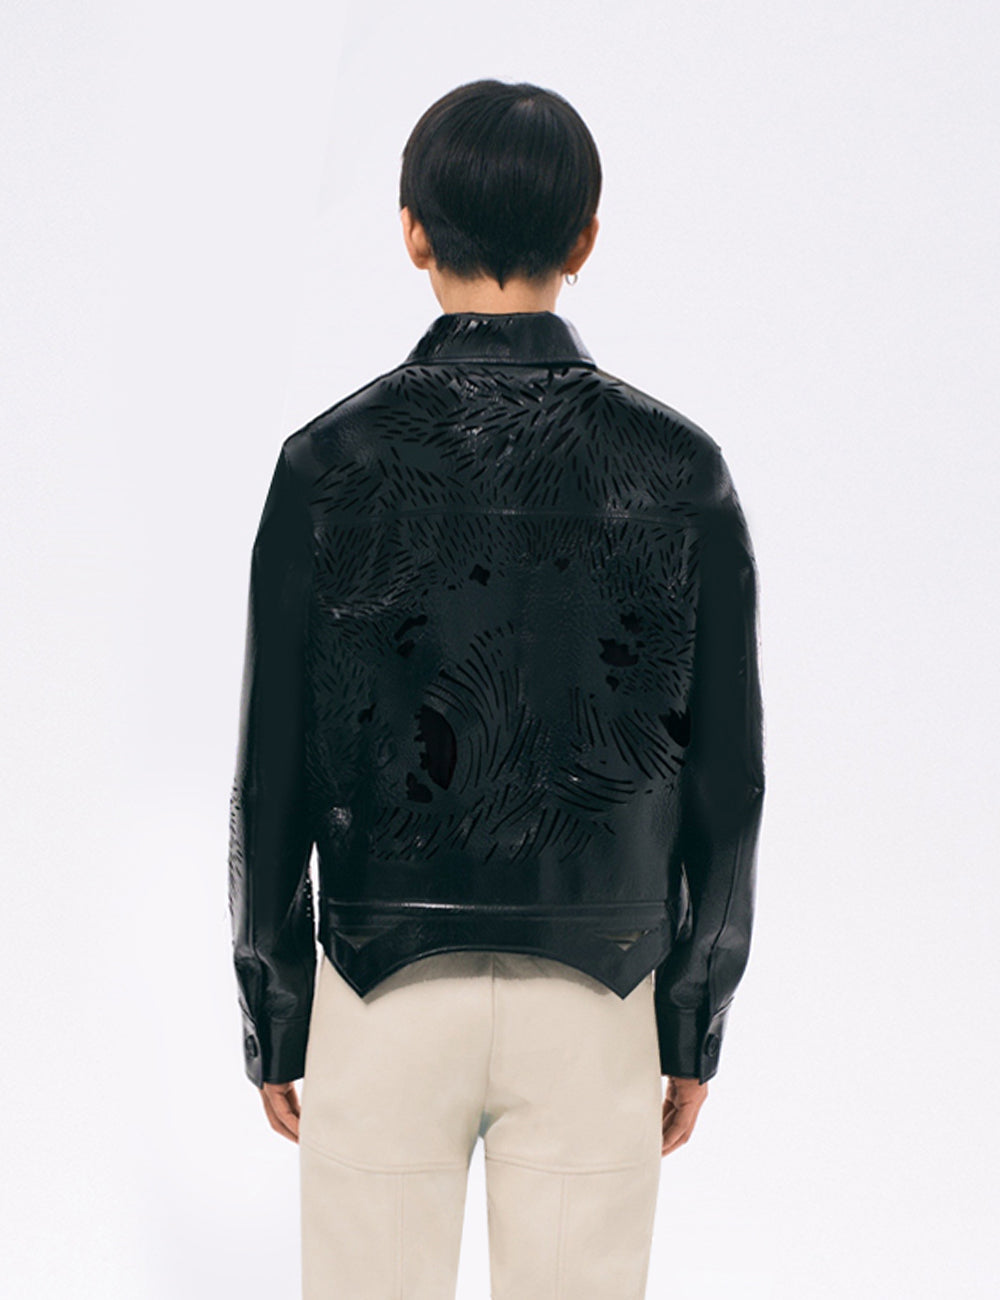 Xu Zhang Black Laser Cut Leather Jacket